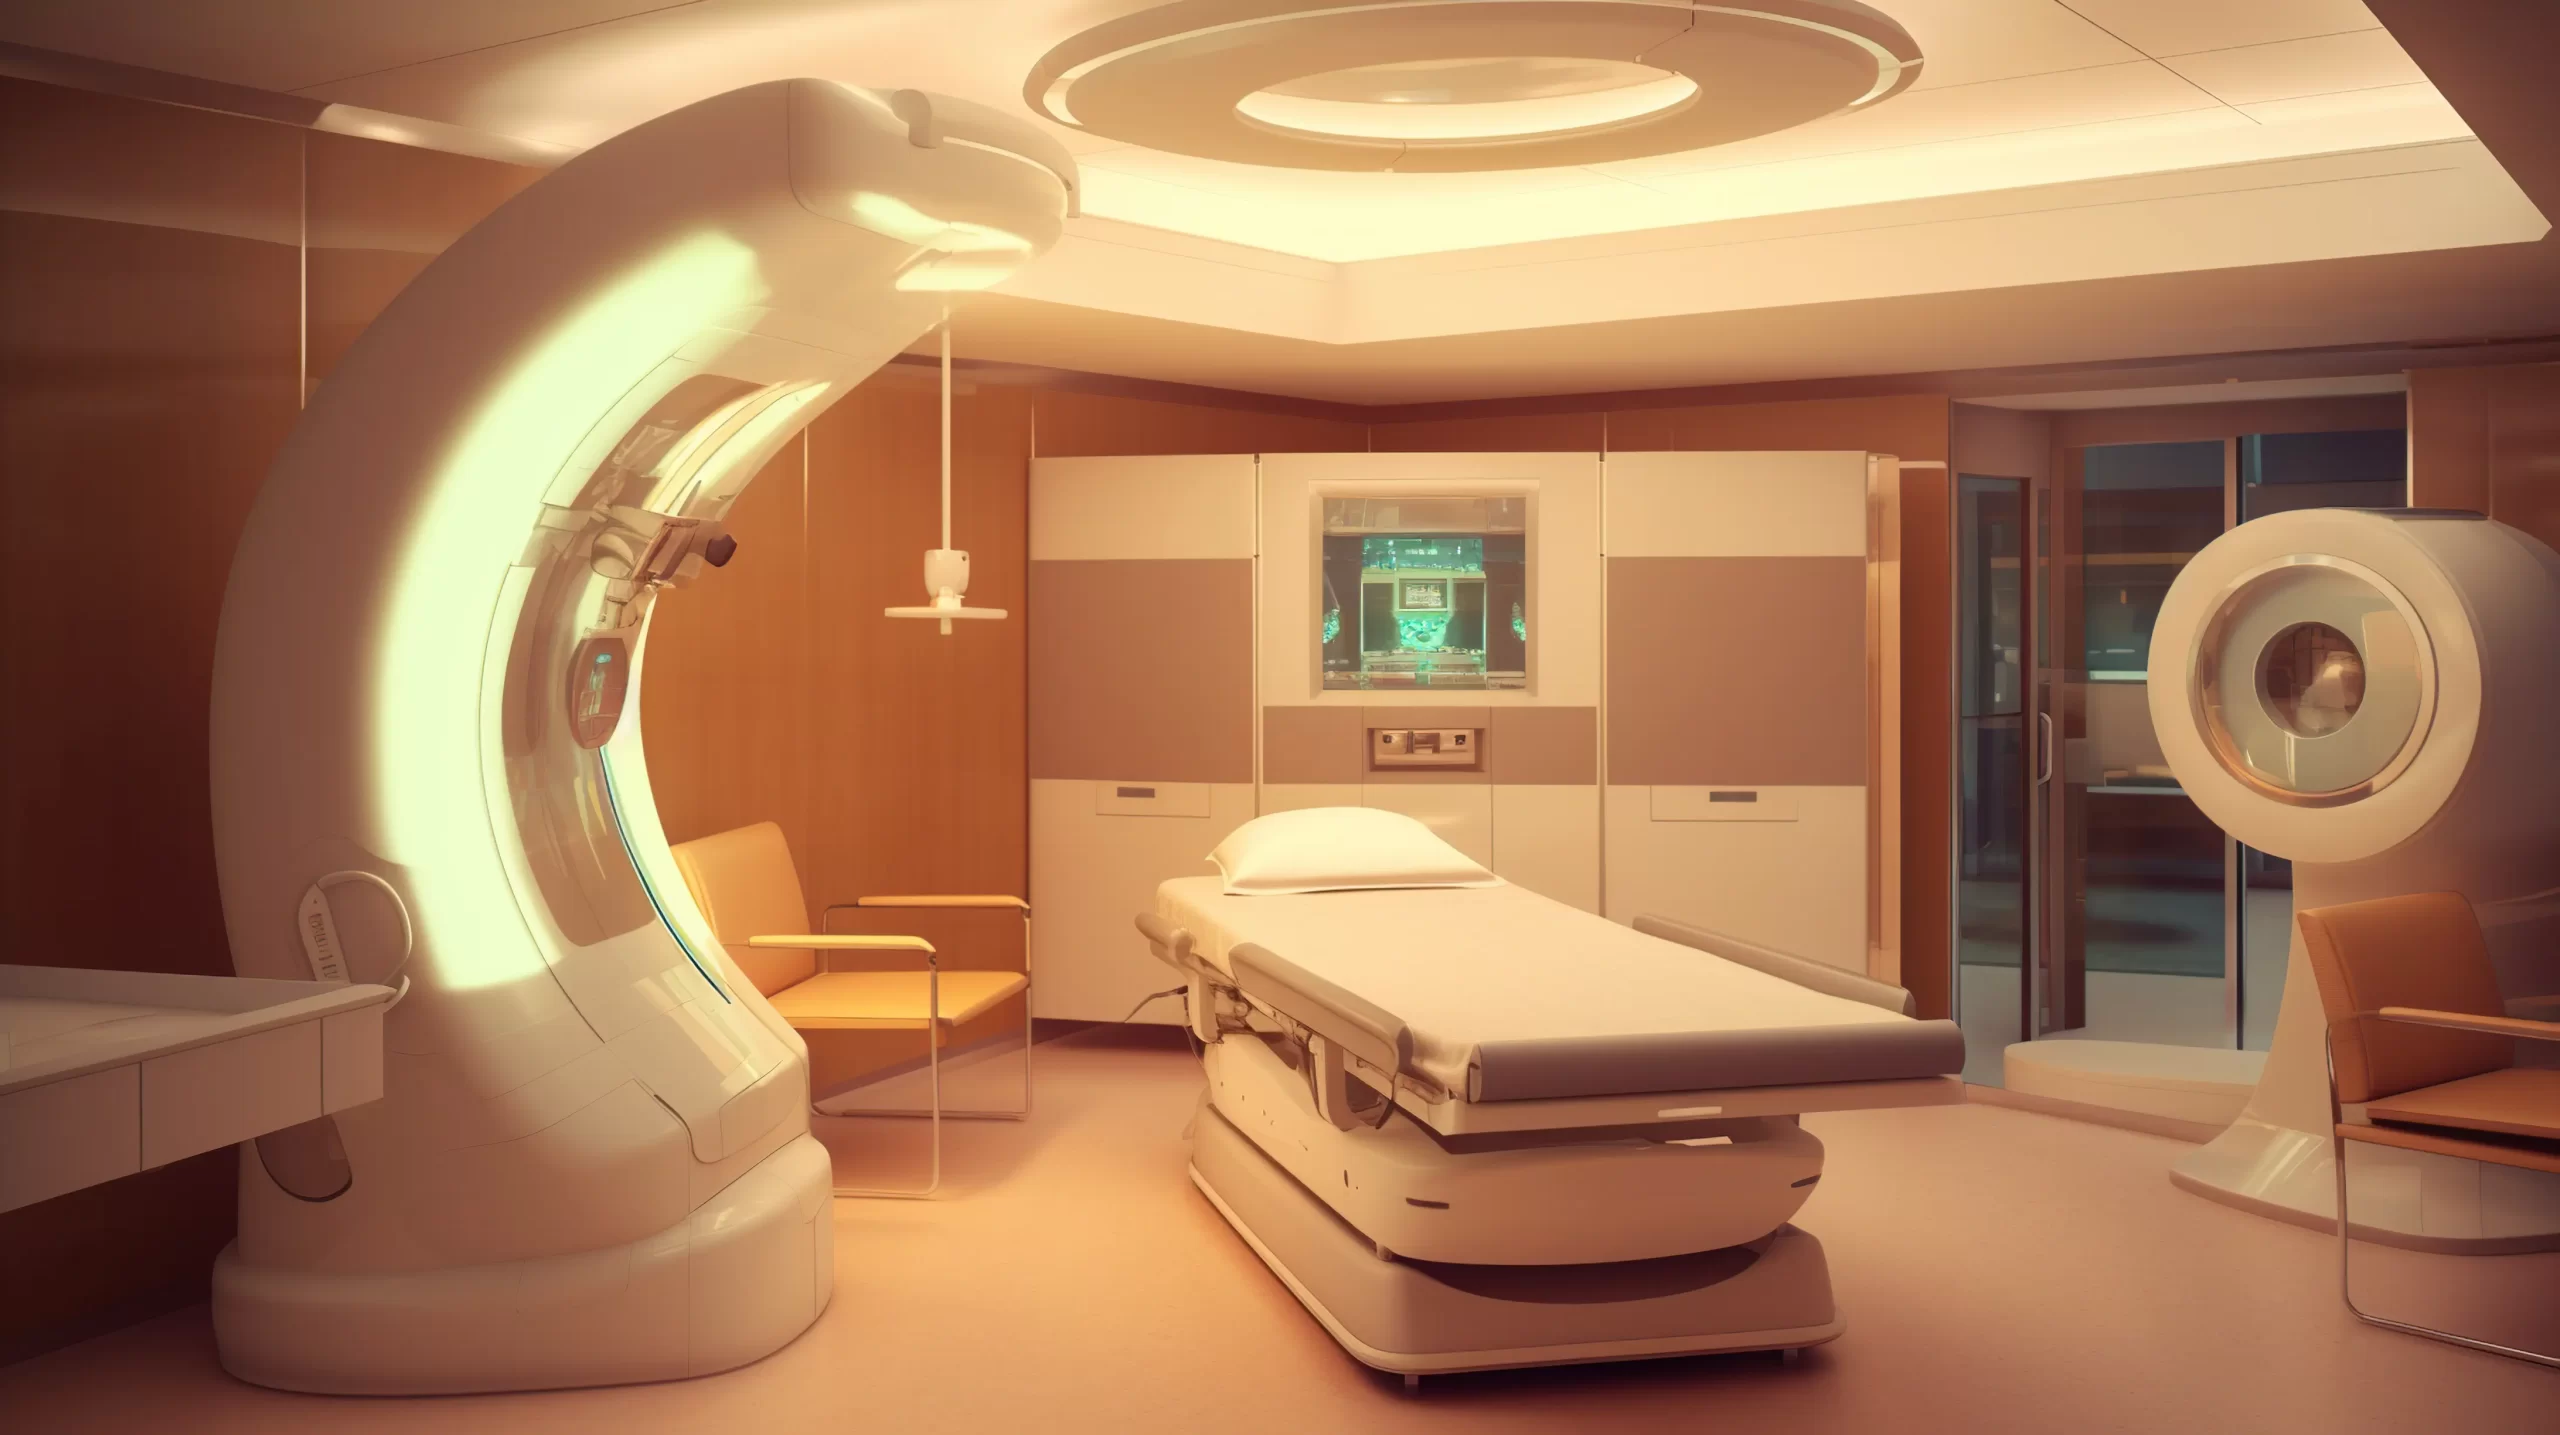 radiation therapy,放射線治療イメージ